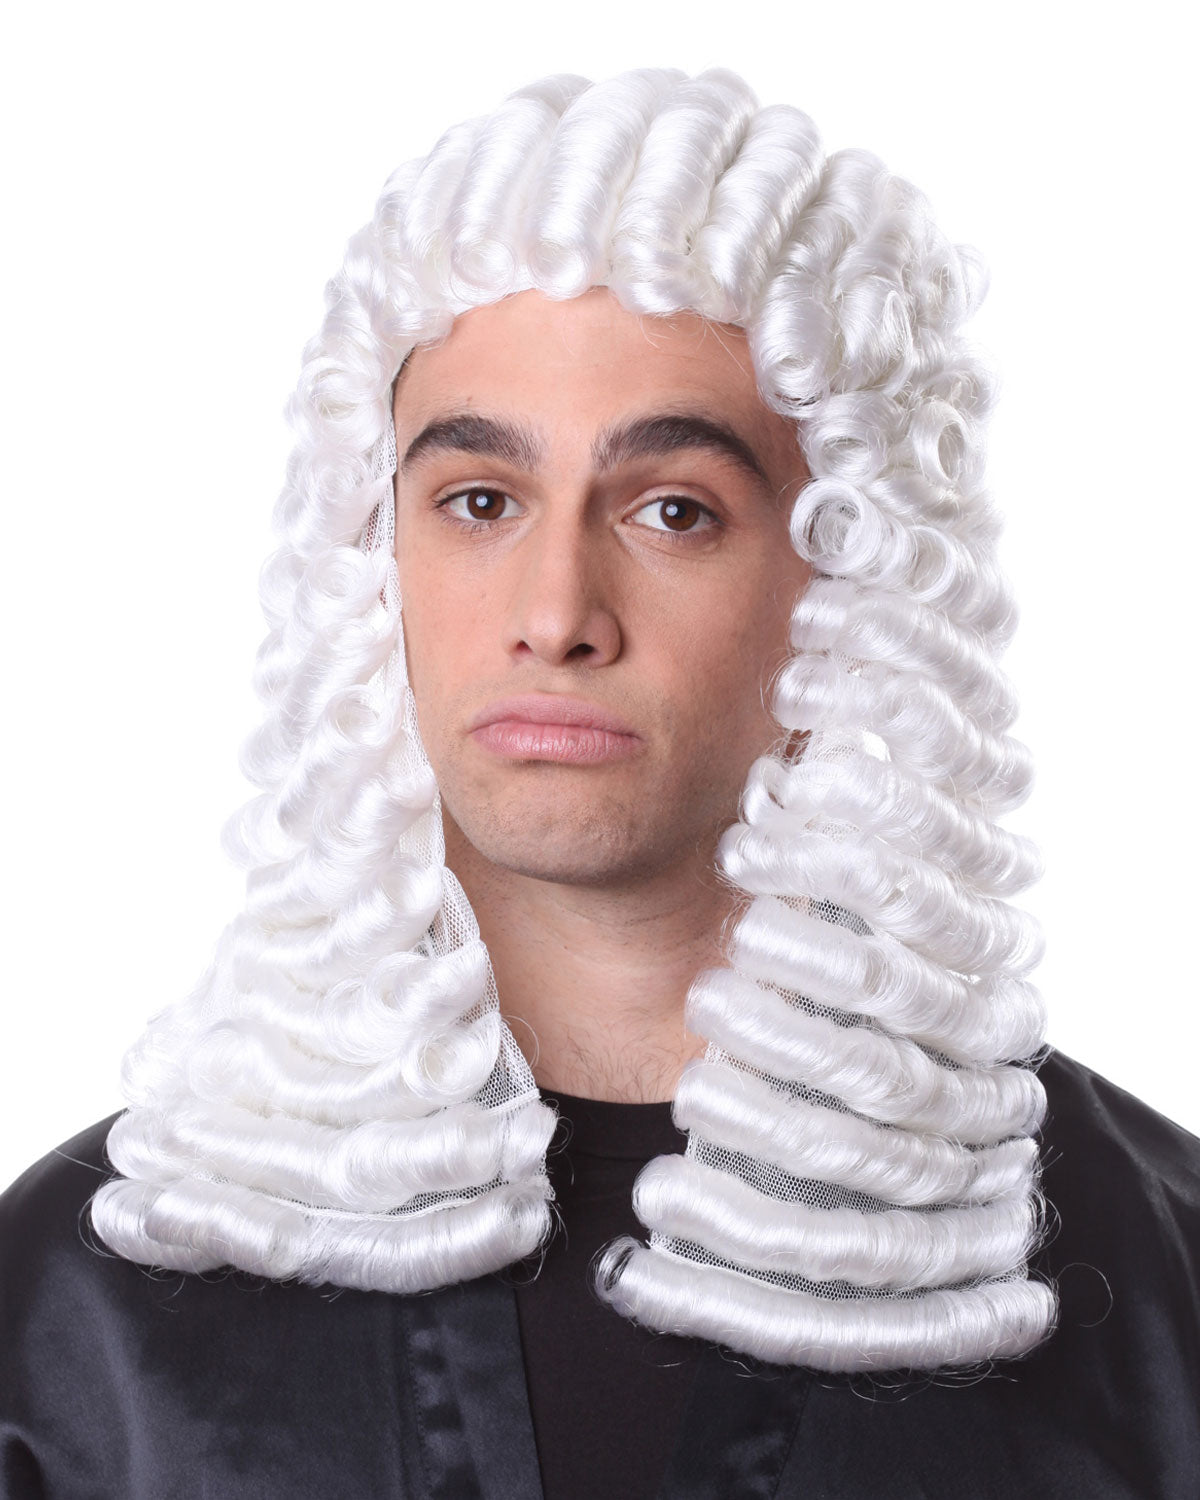 Judge in White